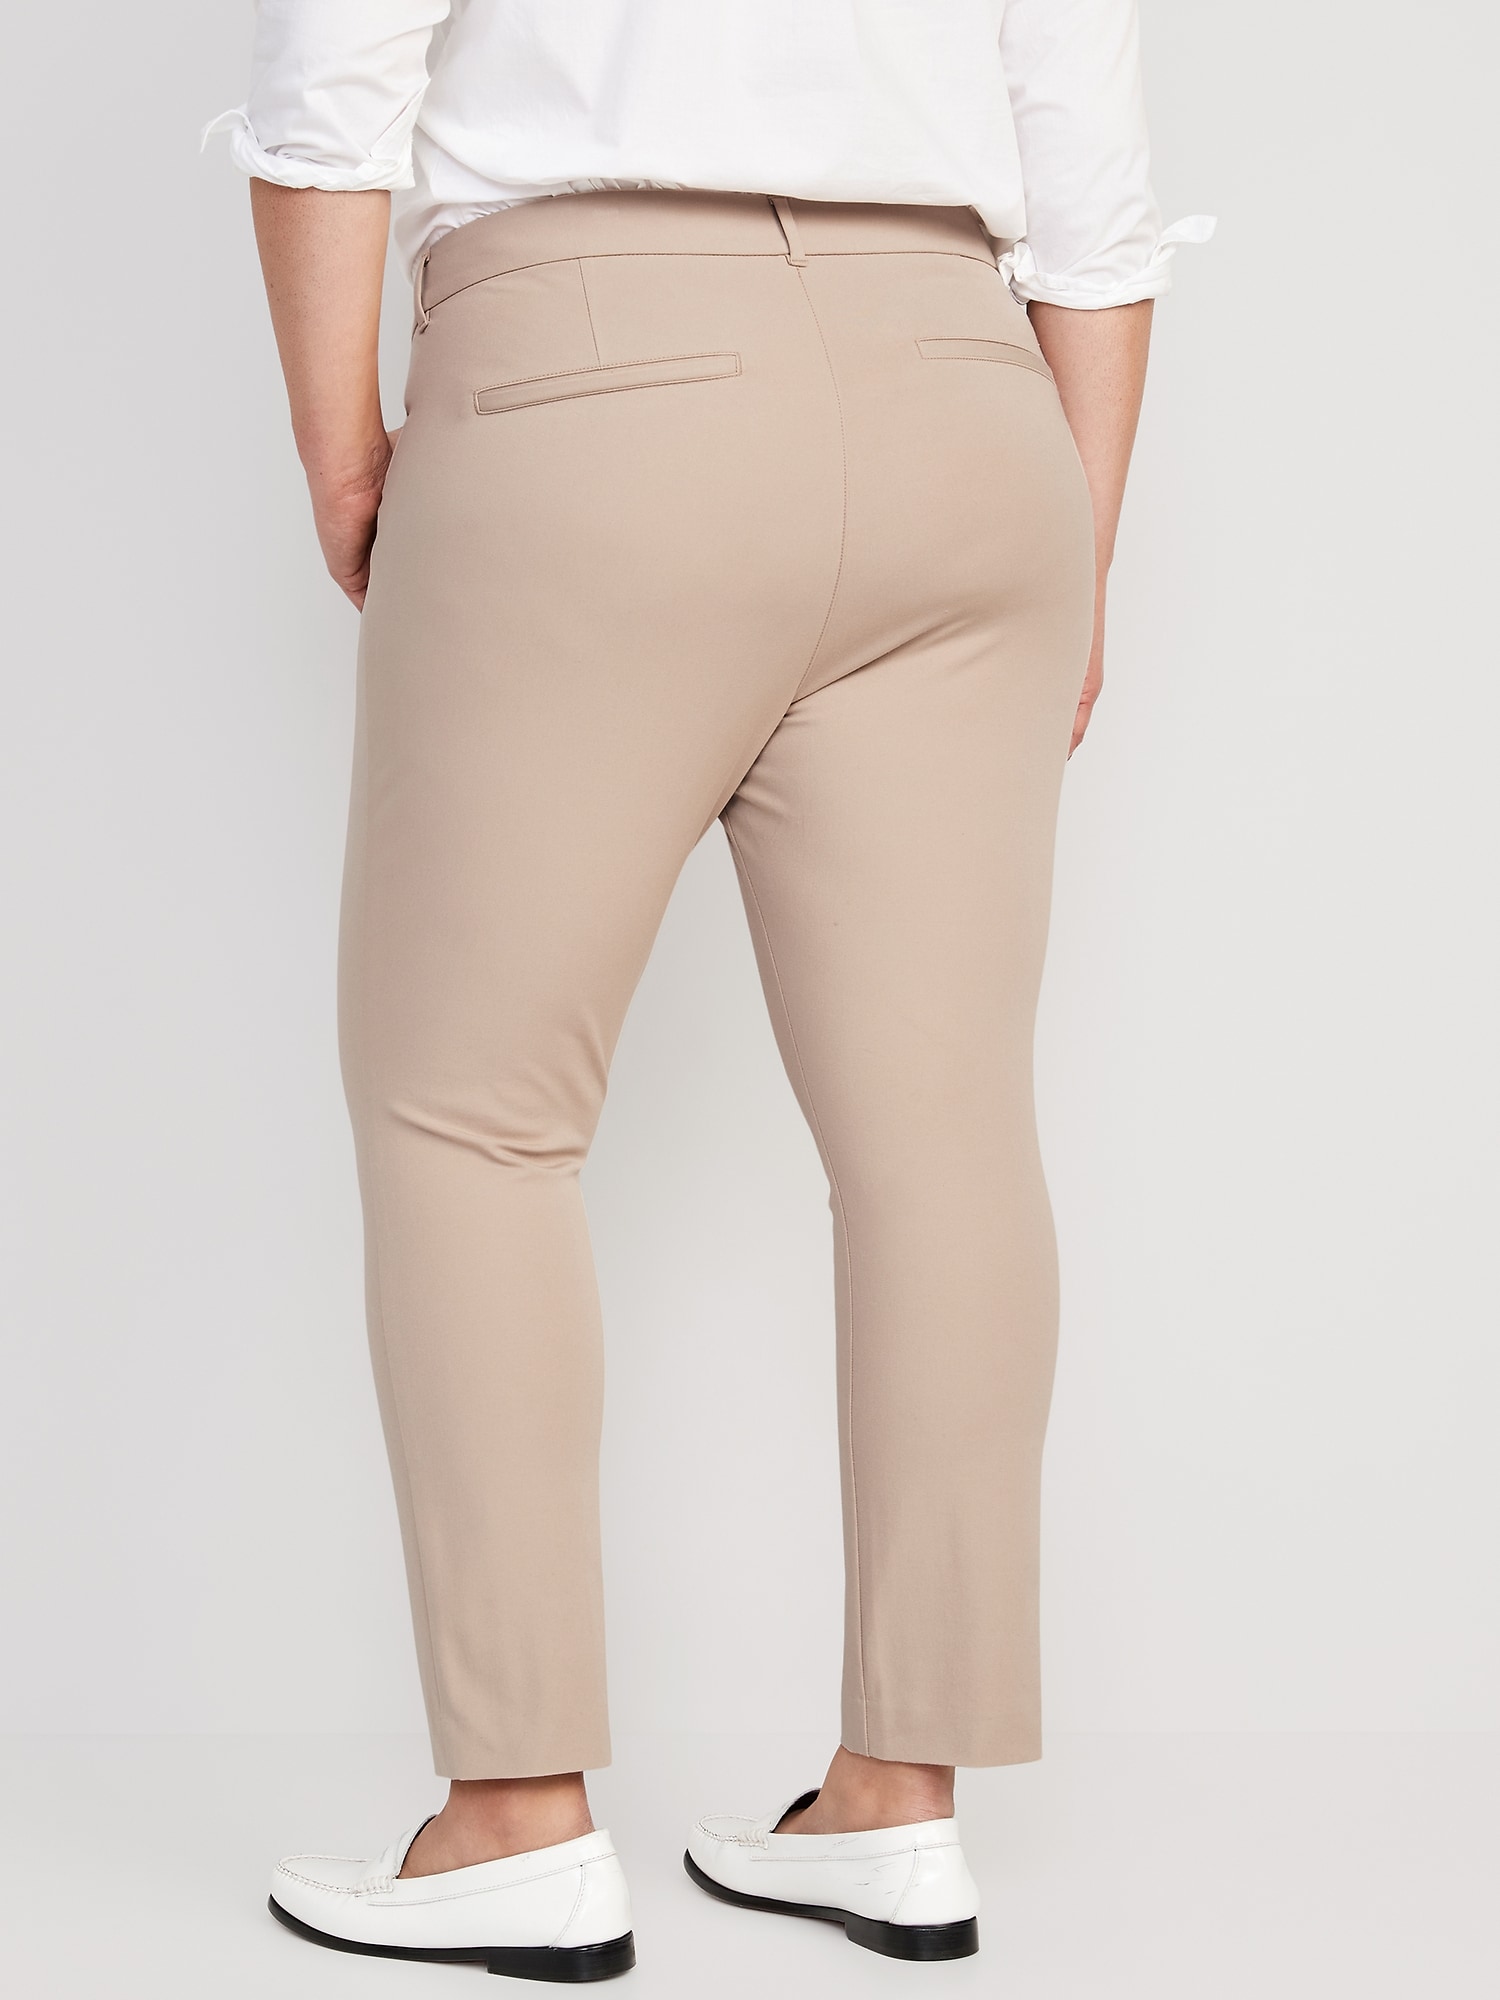 Old Navy Women's Orange Flat Front Patch Pocket Pixie Utility Pants Size 8